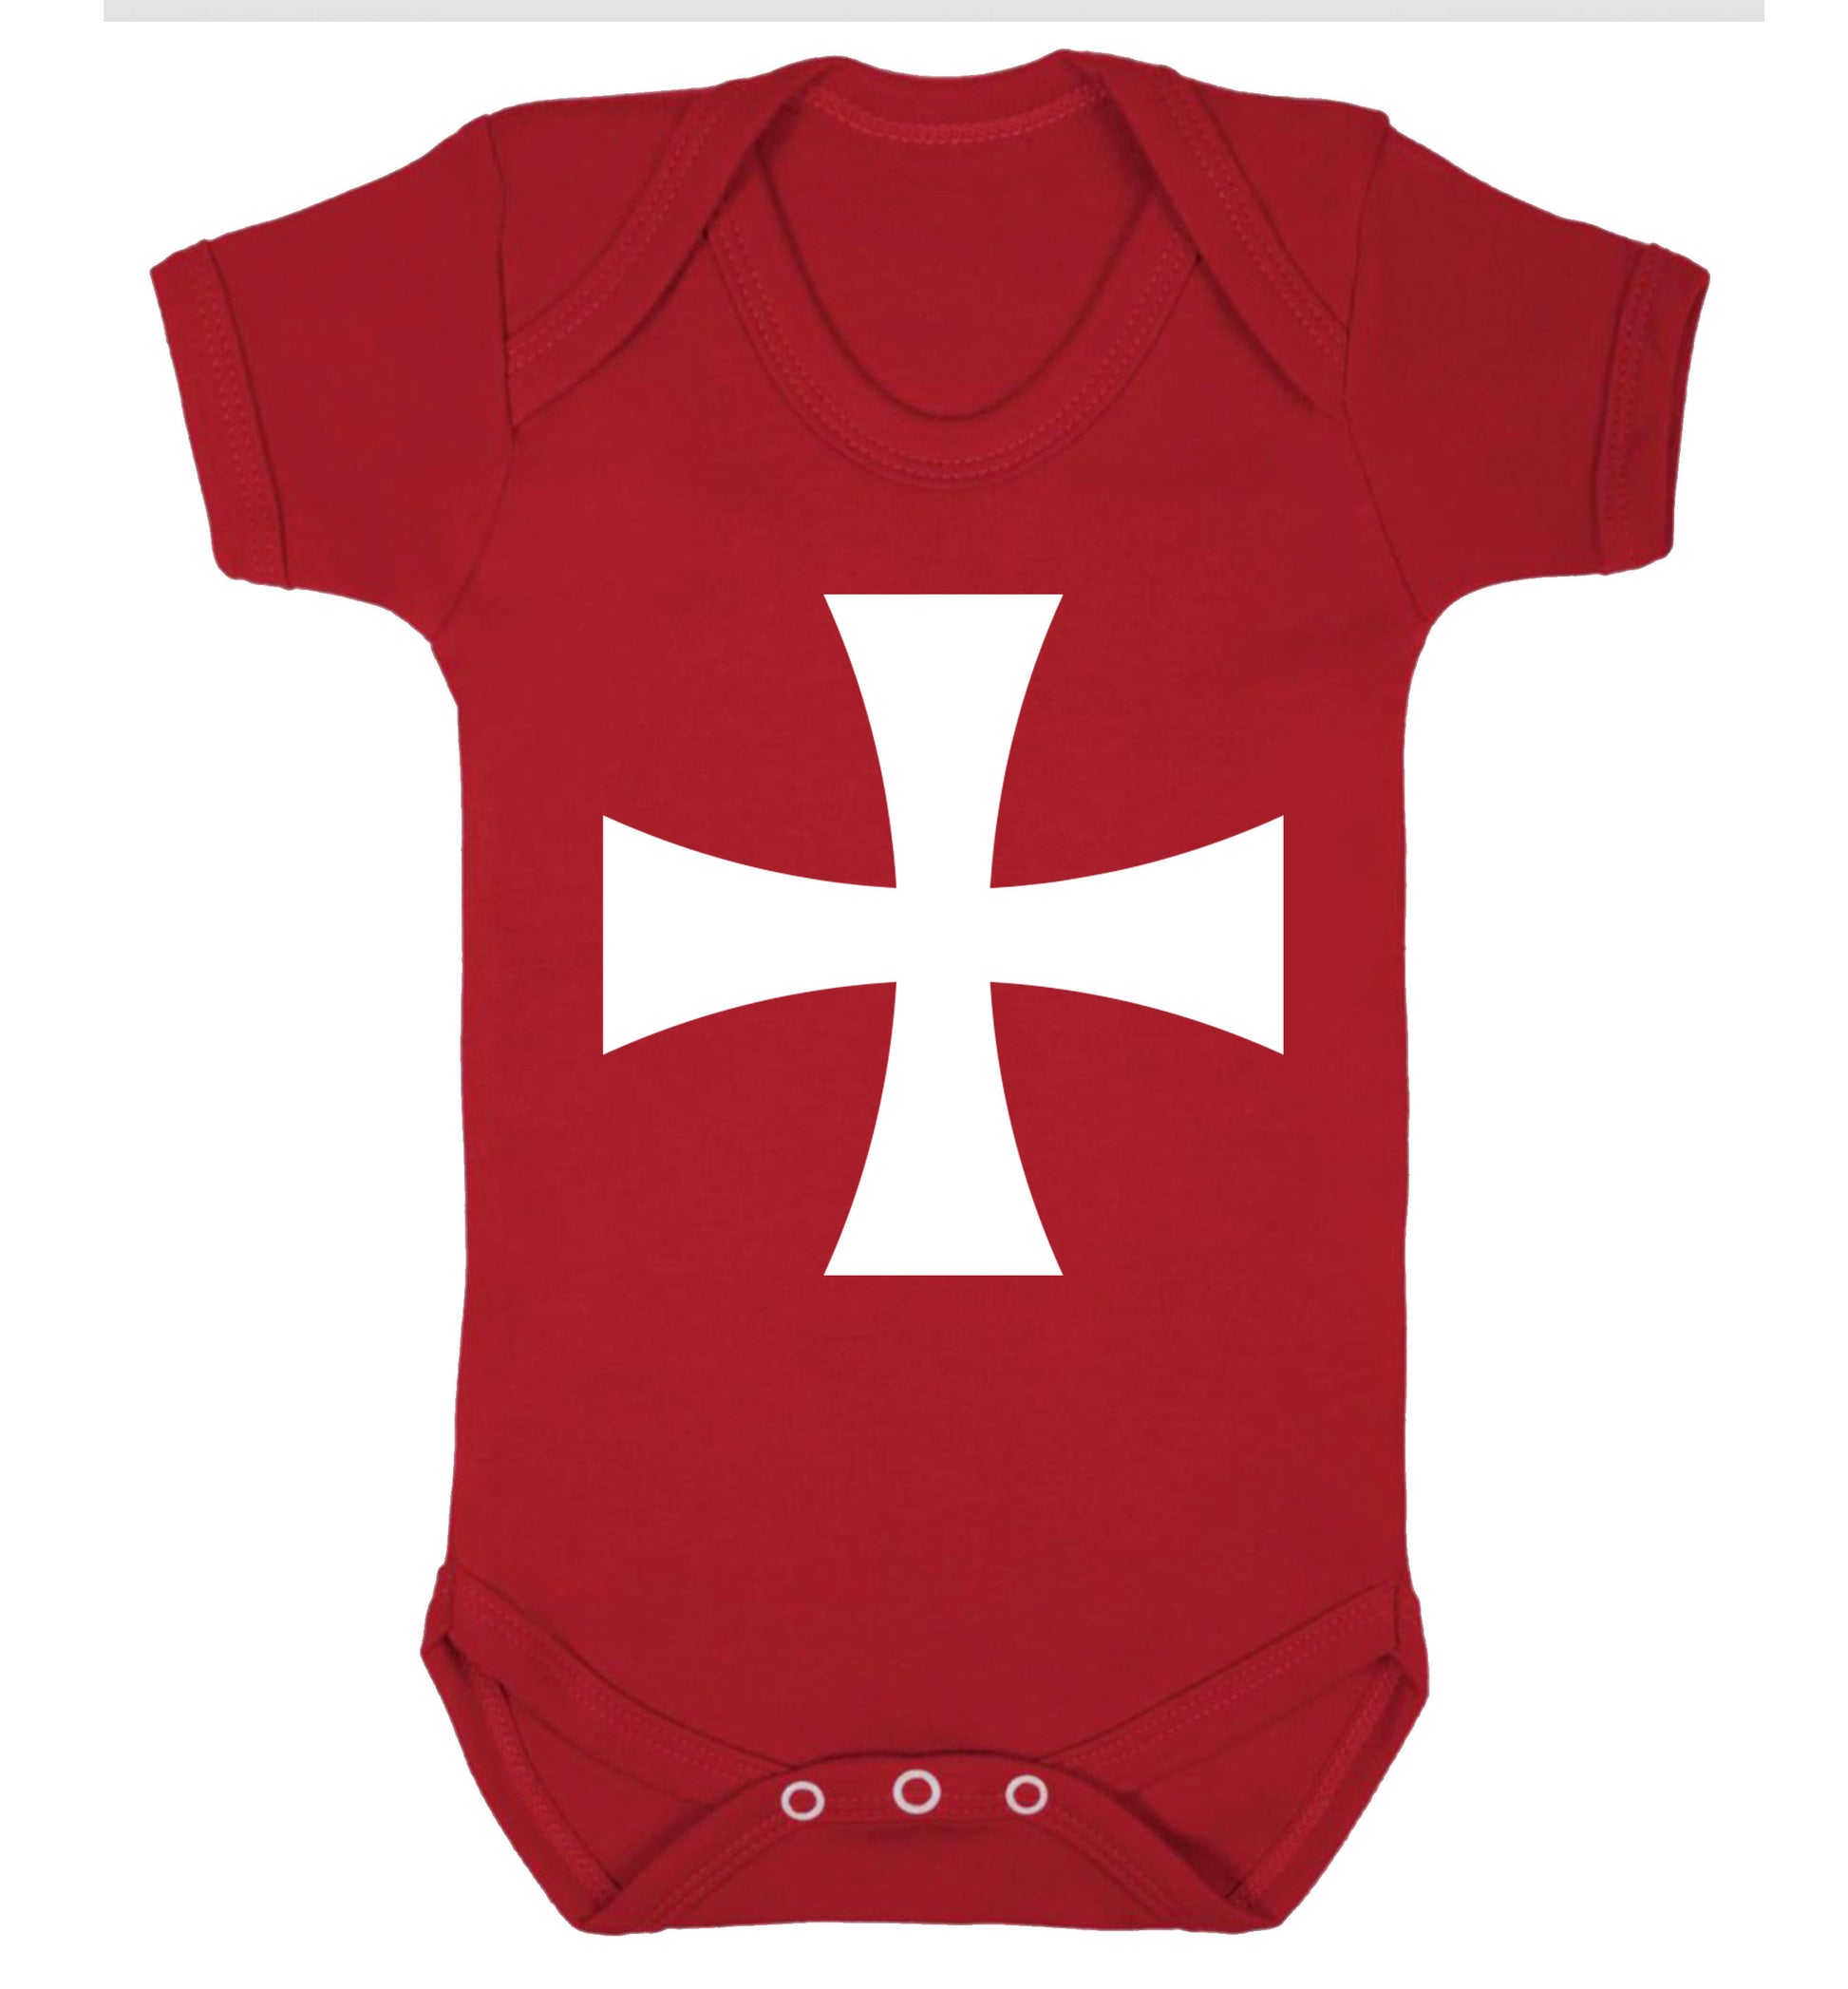 Knights Templar cross Baby Vest red 18-24 months